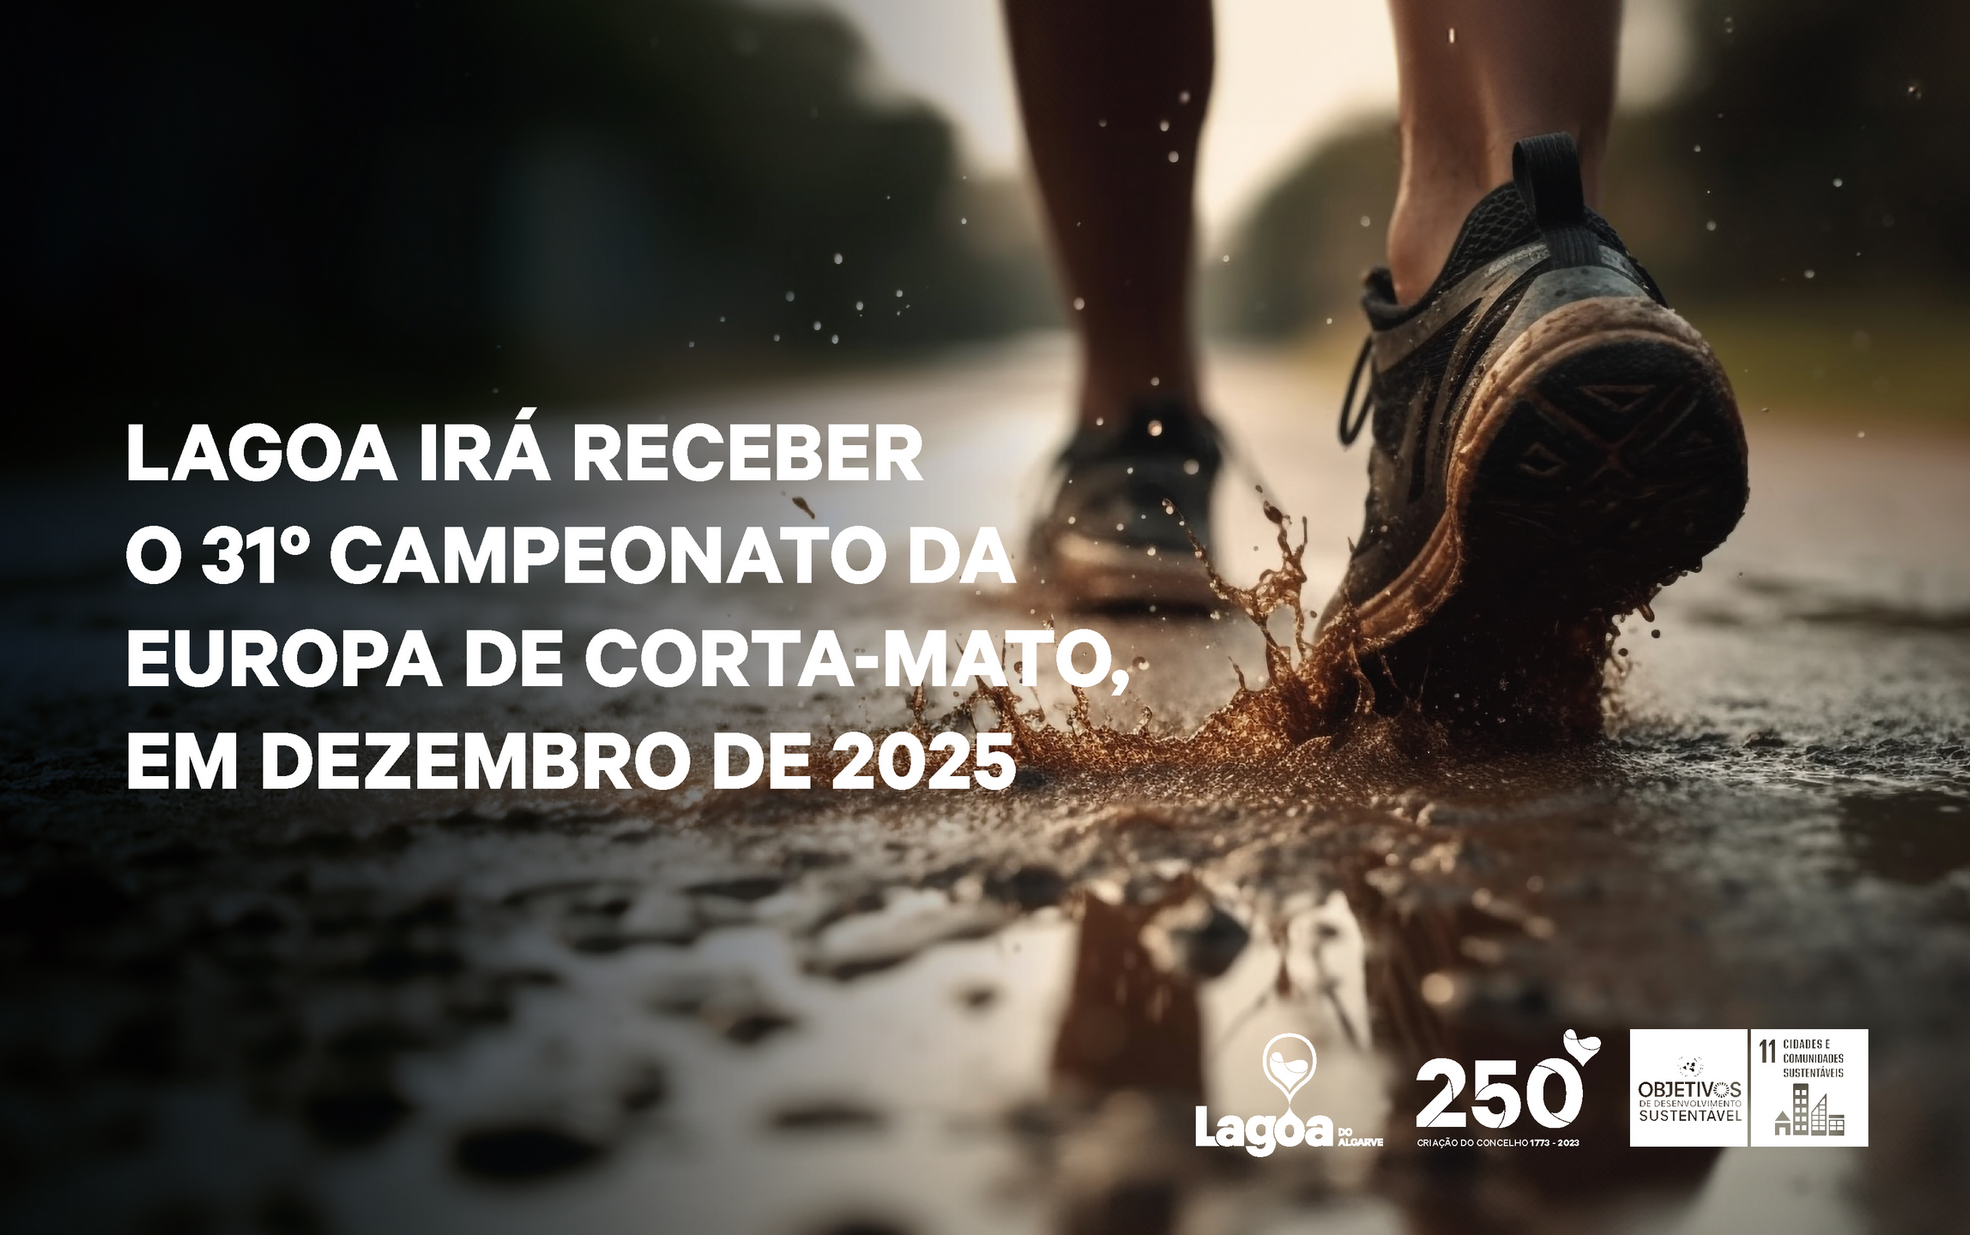 Lagoa irá receber o Campeonato da Europa de Corta-Mato em 2025